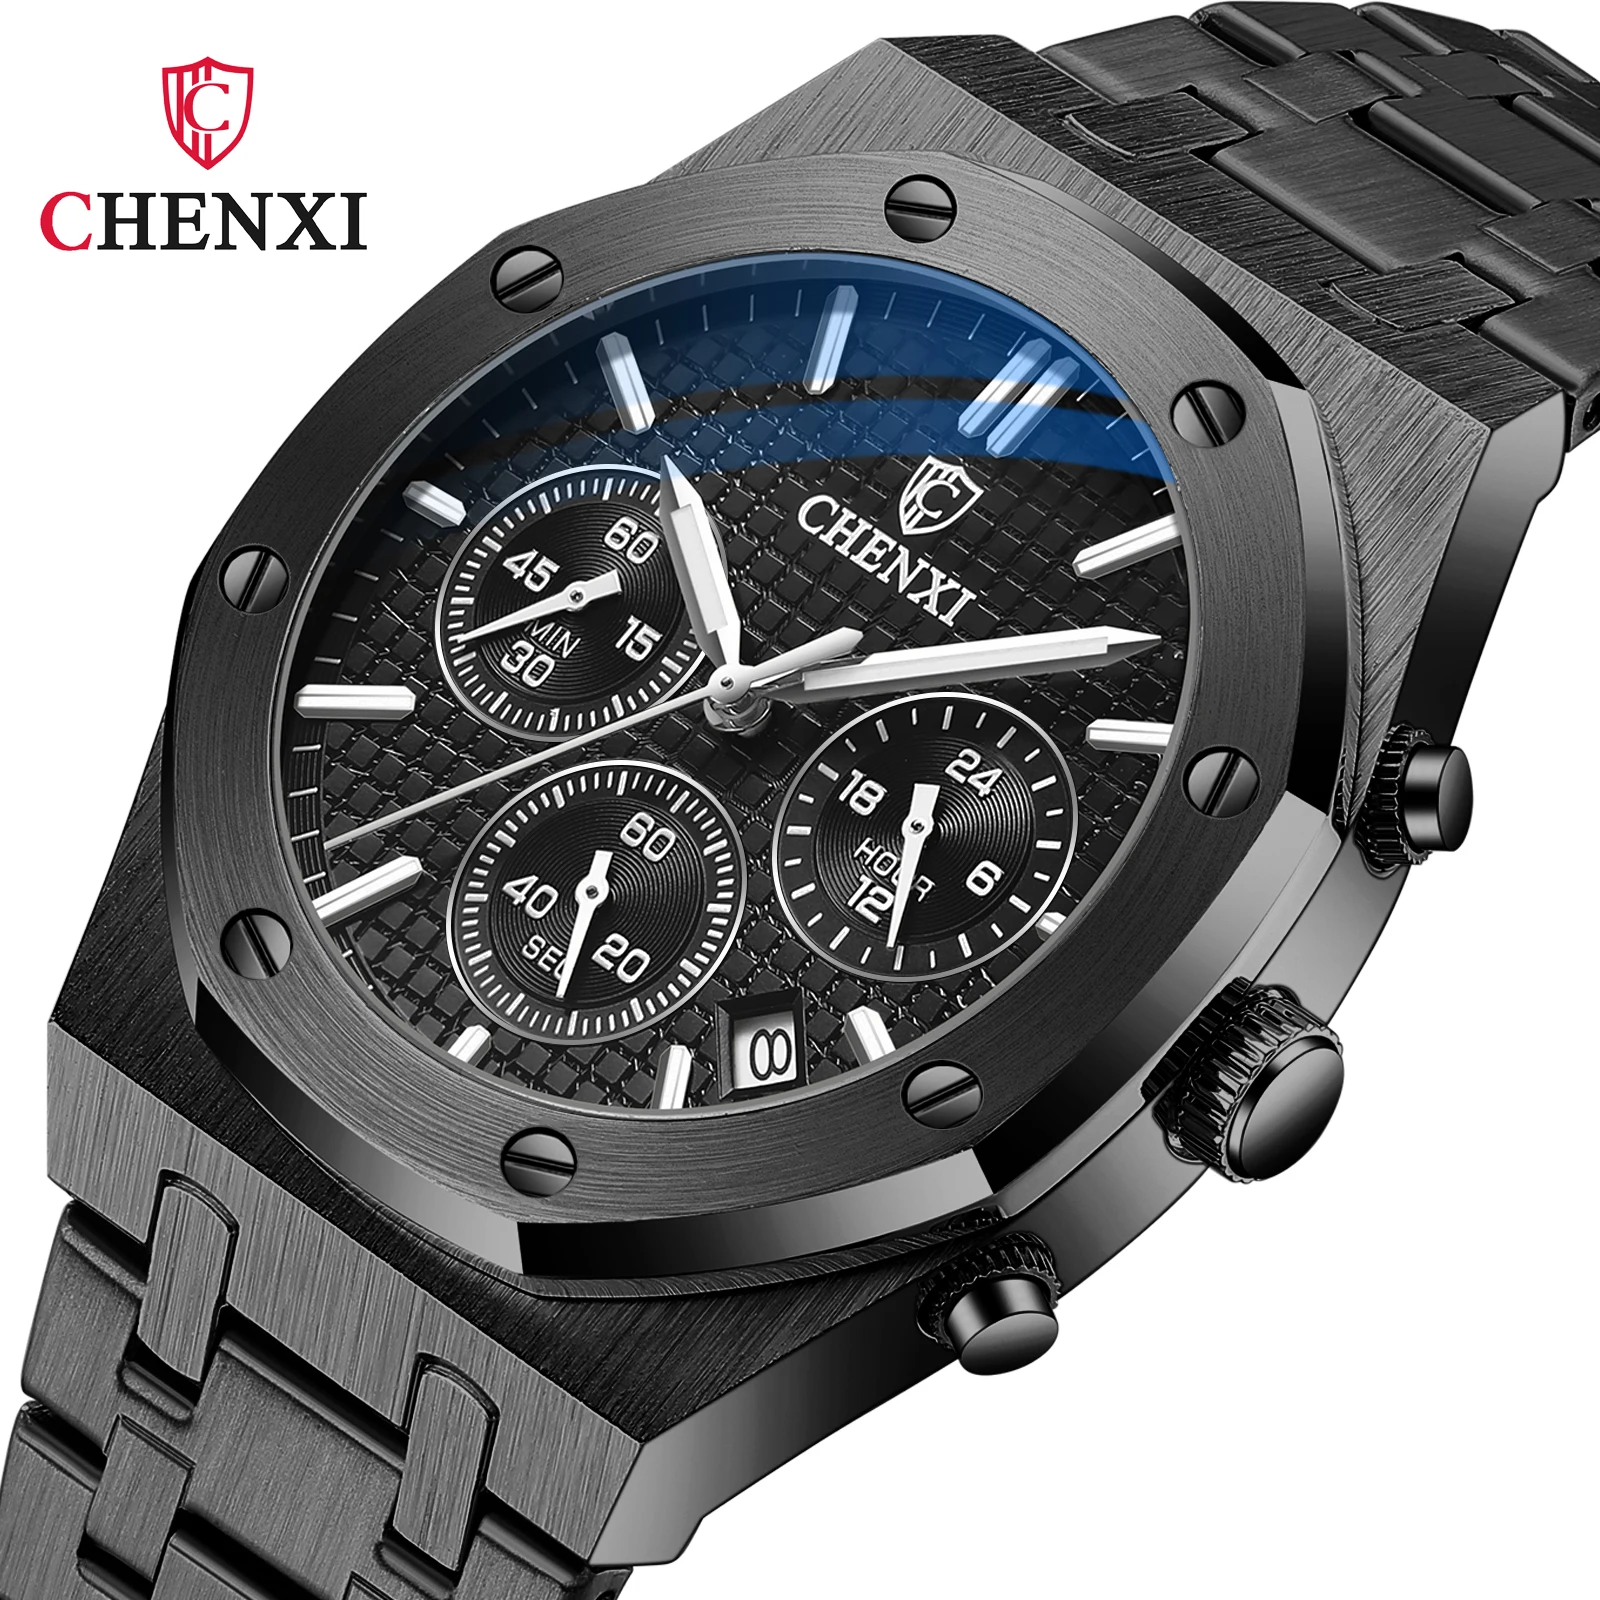 

New CHENXI 948 Top Luxury Brand Men Quartz Watch Stainless Steel Waterproof Luminous Chronograph Fashion Business Wristwatch